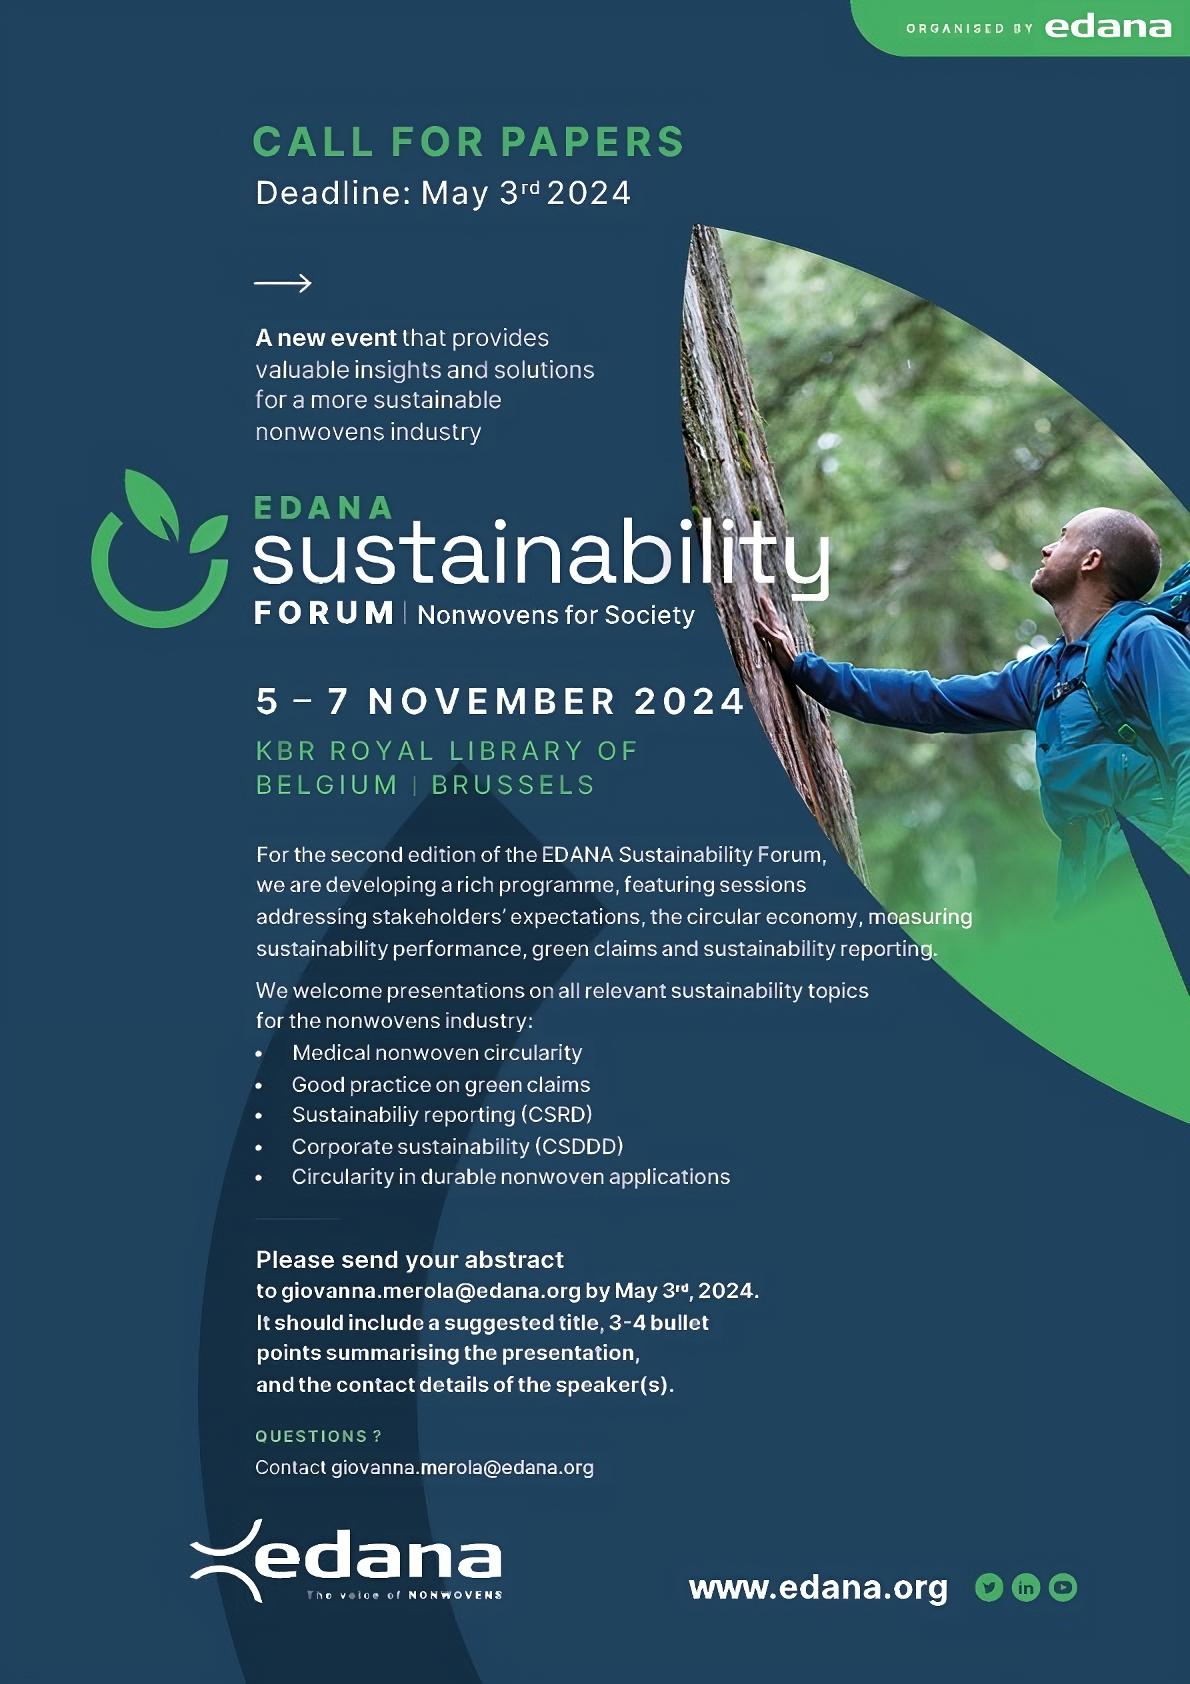 EDANA Sustainability Forum 2024 - CFP